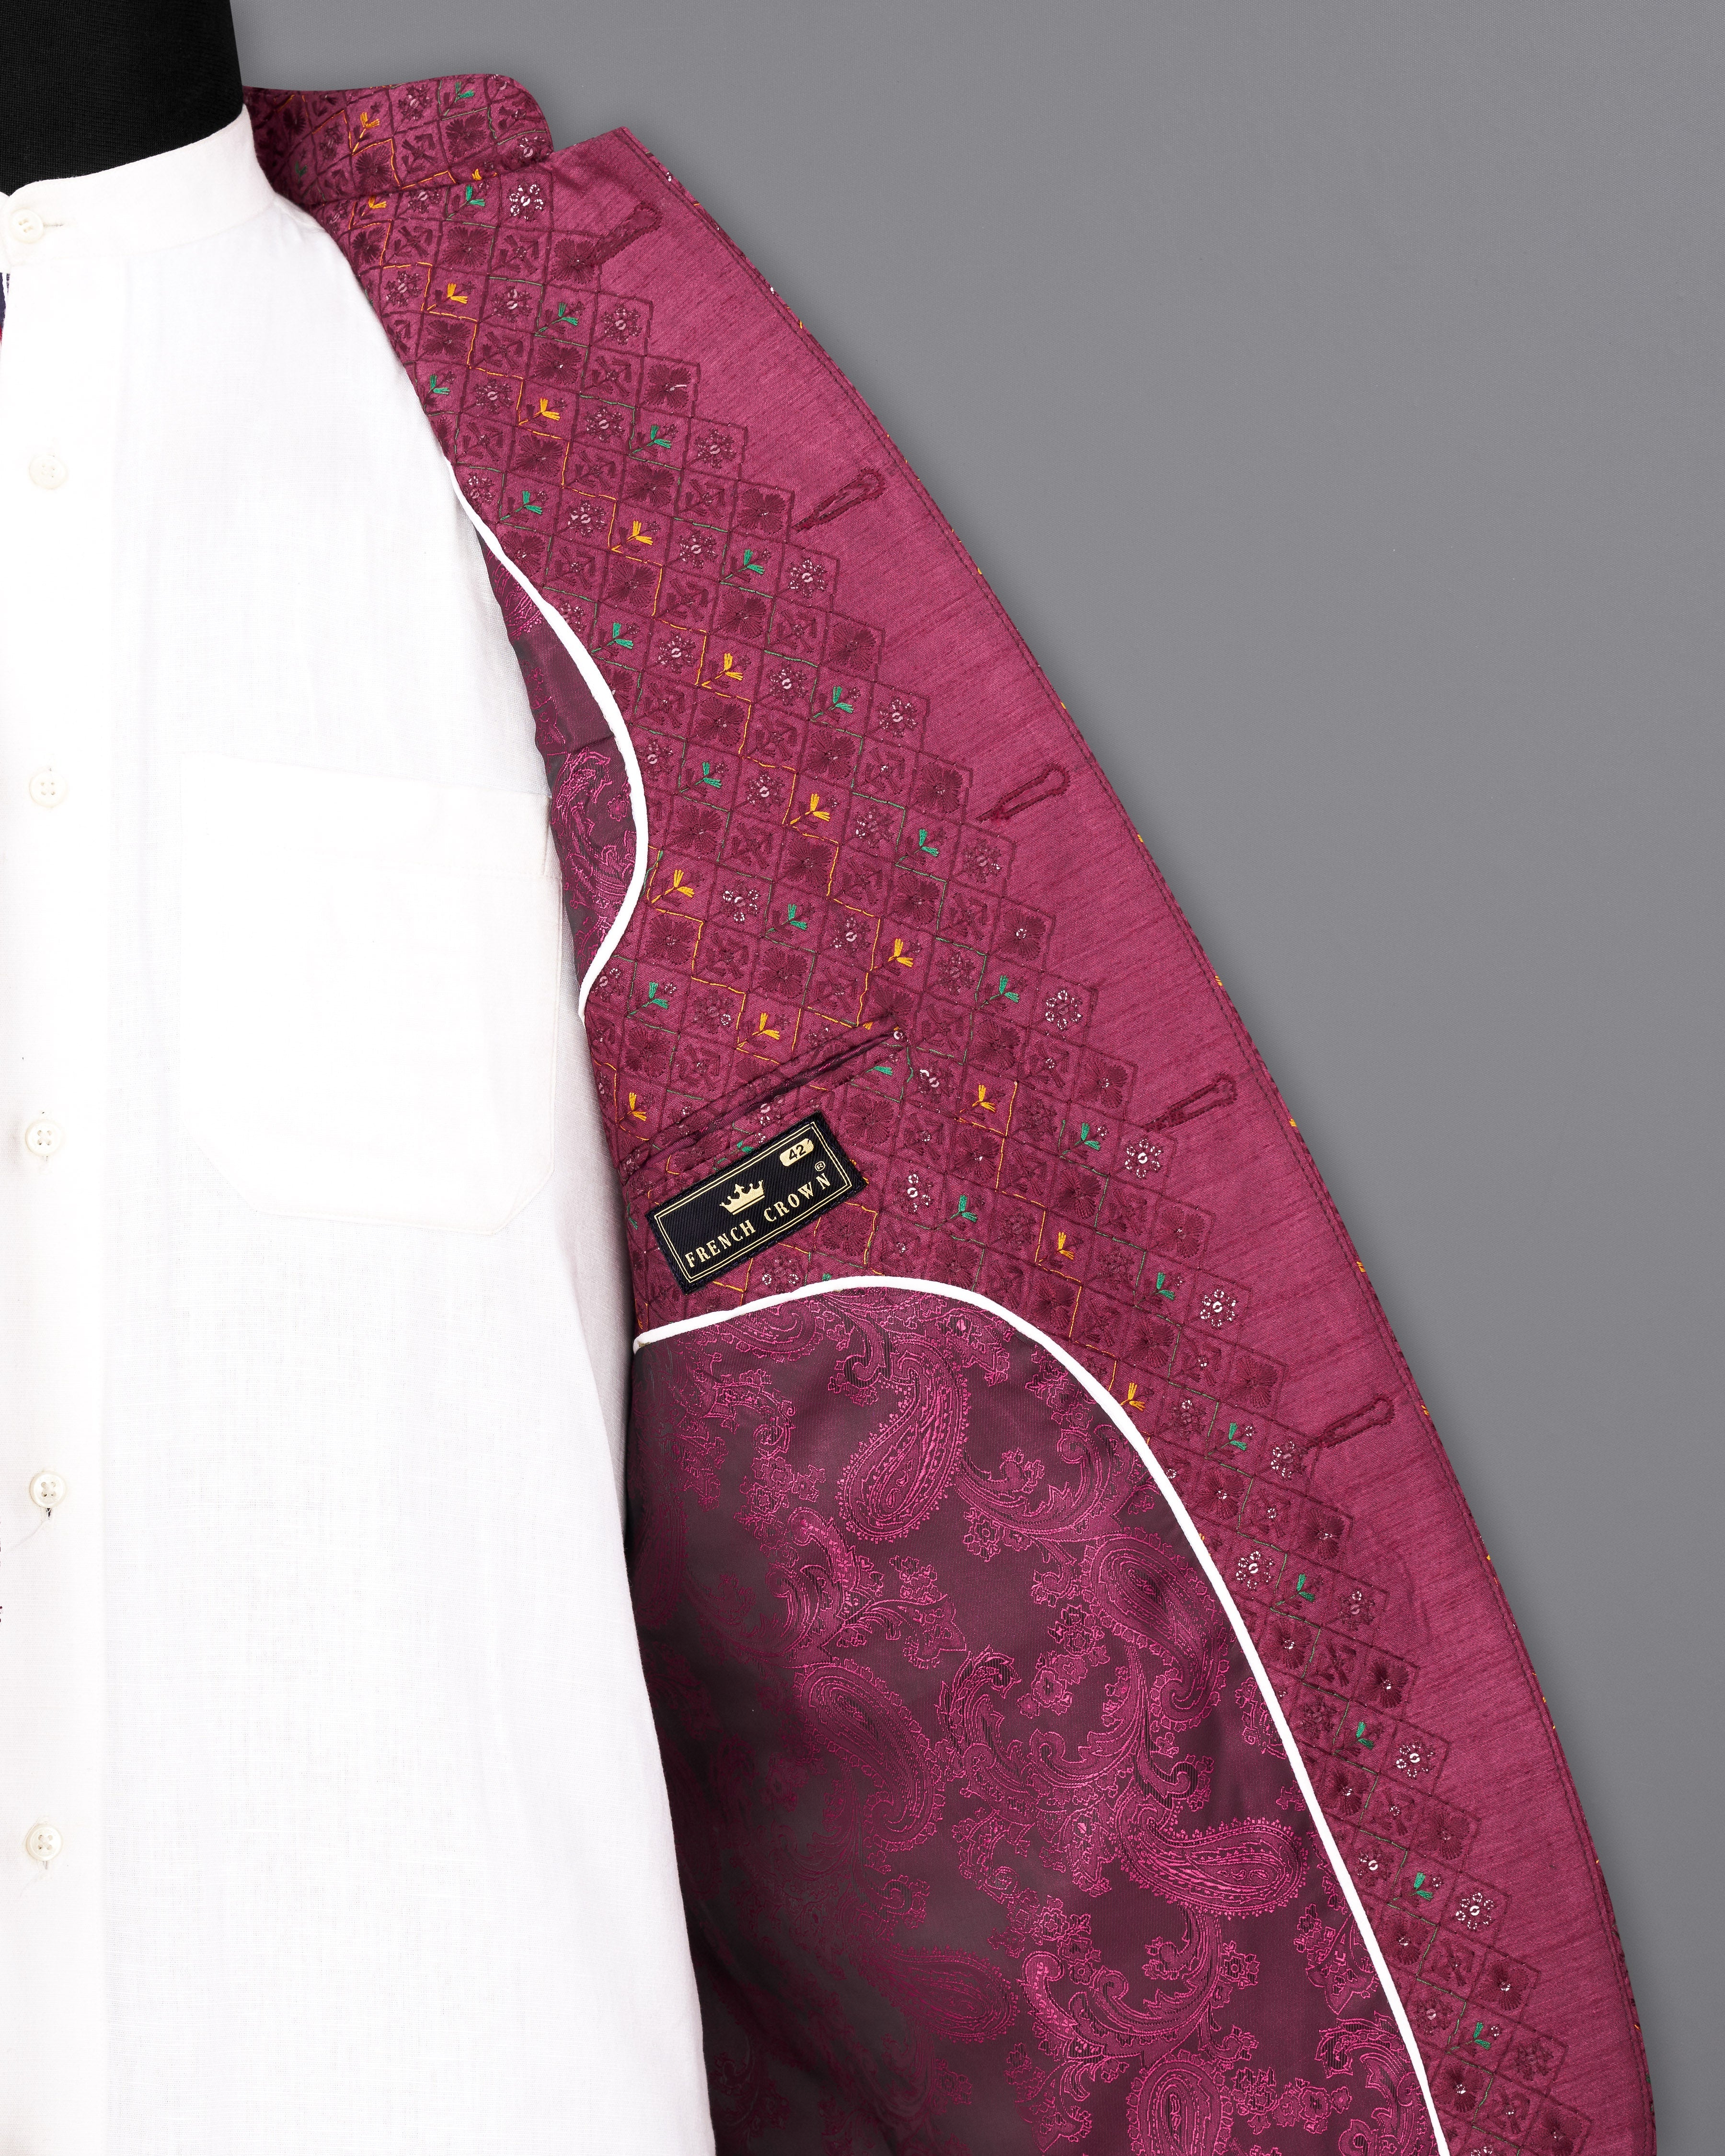 French Gray Textured Premium Cotton Bandhgala/Jodhpuri Suits for Men.